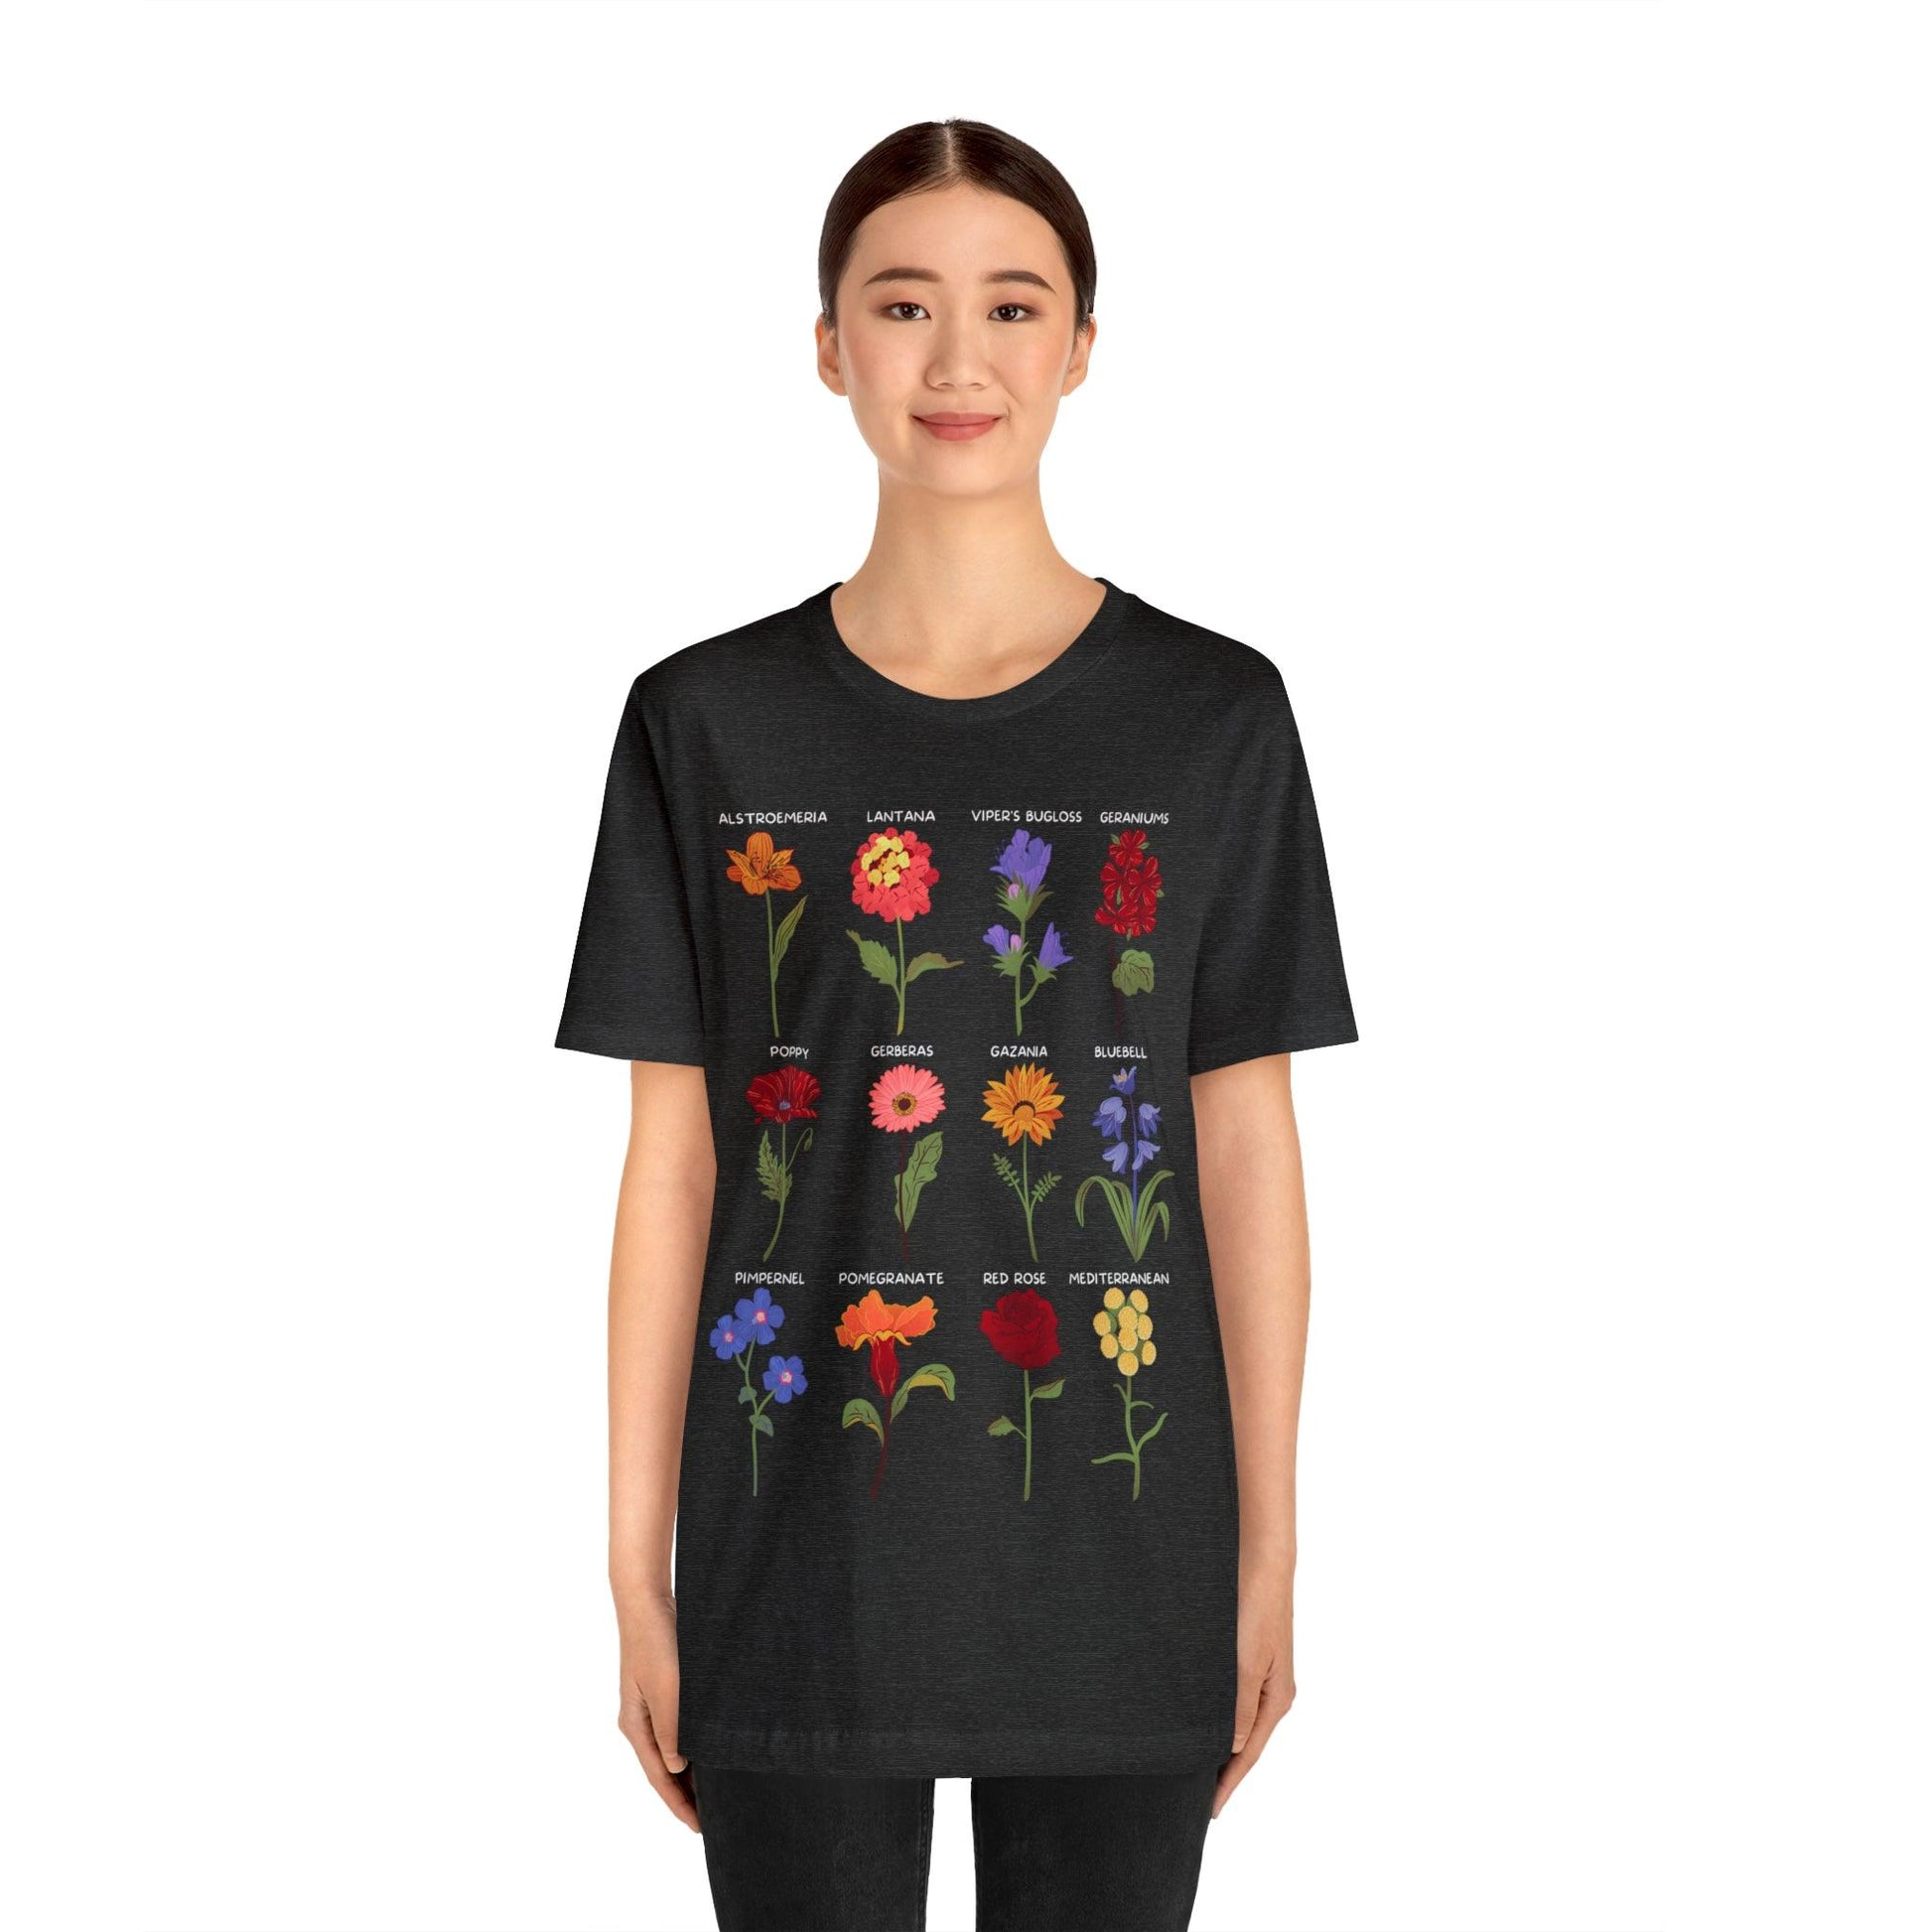 Wildflower Tshirt, Flower Shirt, Types of Flowers Shirt, Floral Tshirt, Gift for Women, Ladies Shirts Best Friend Gift, Plant Mom Nature Tee - Giftsmojo